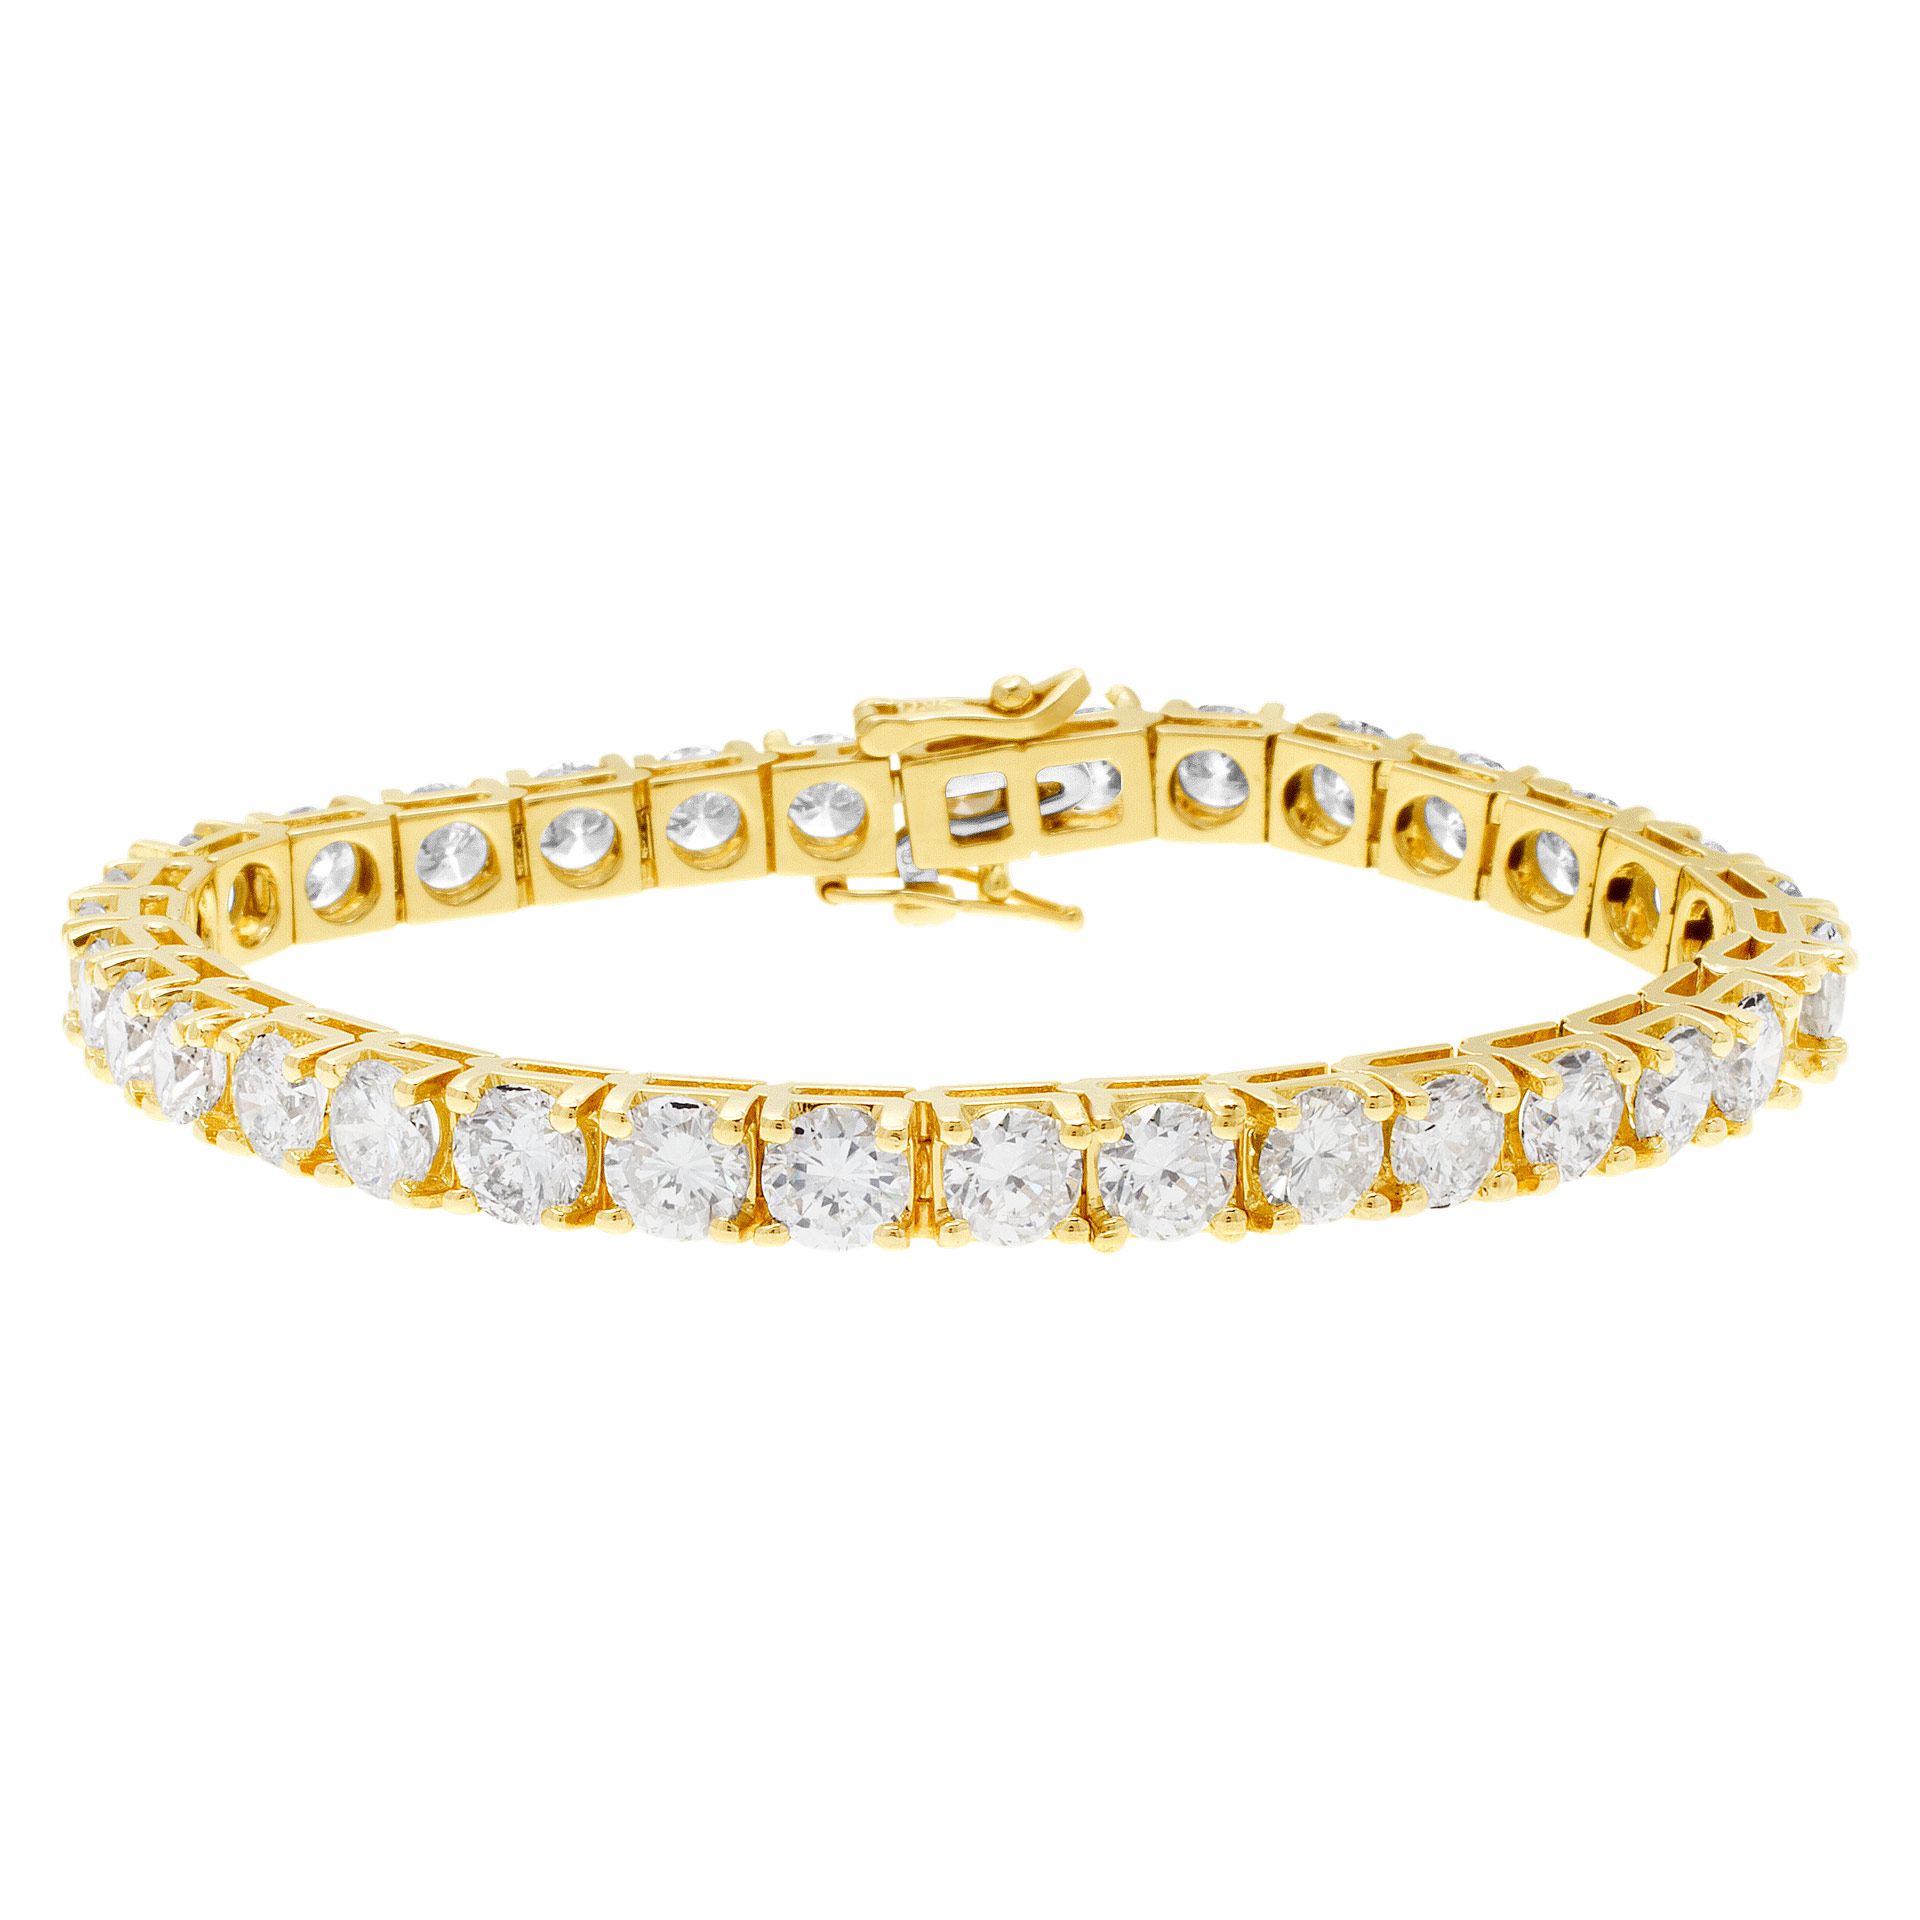 Diamond tennis bracelet in 14k 16 carats in diamonds (E-G color, SI1 clarity)